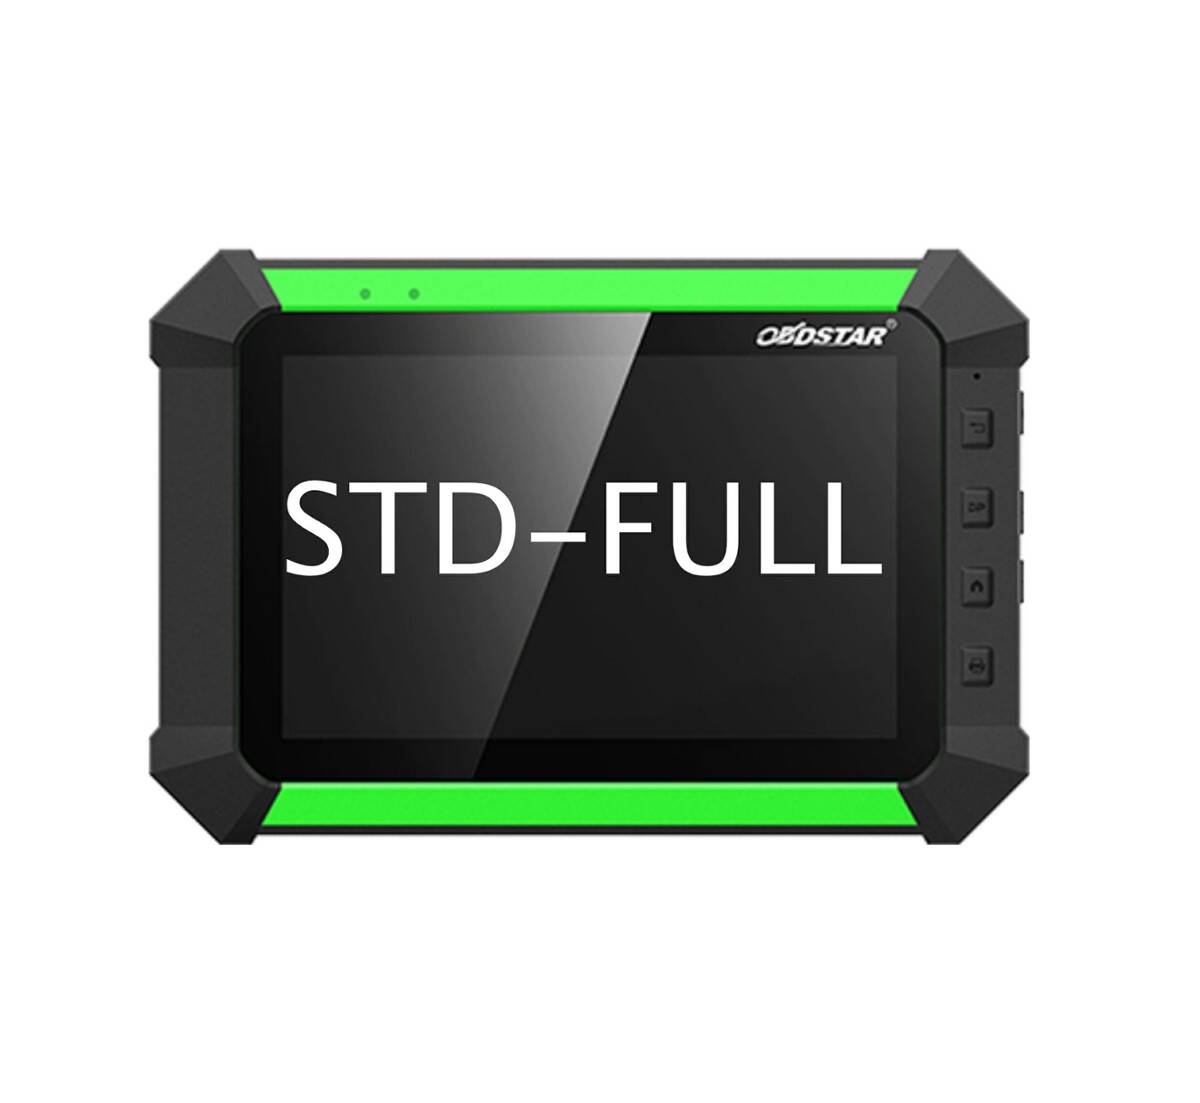 Upgrade to version STD FULL